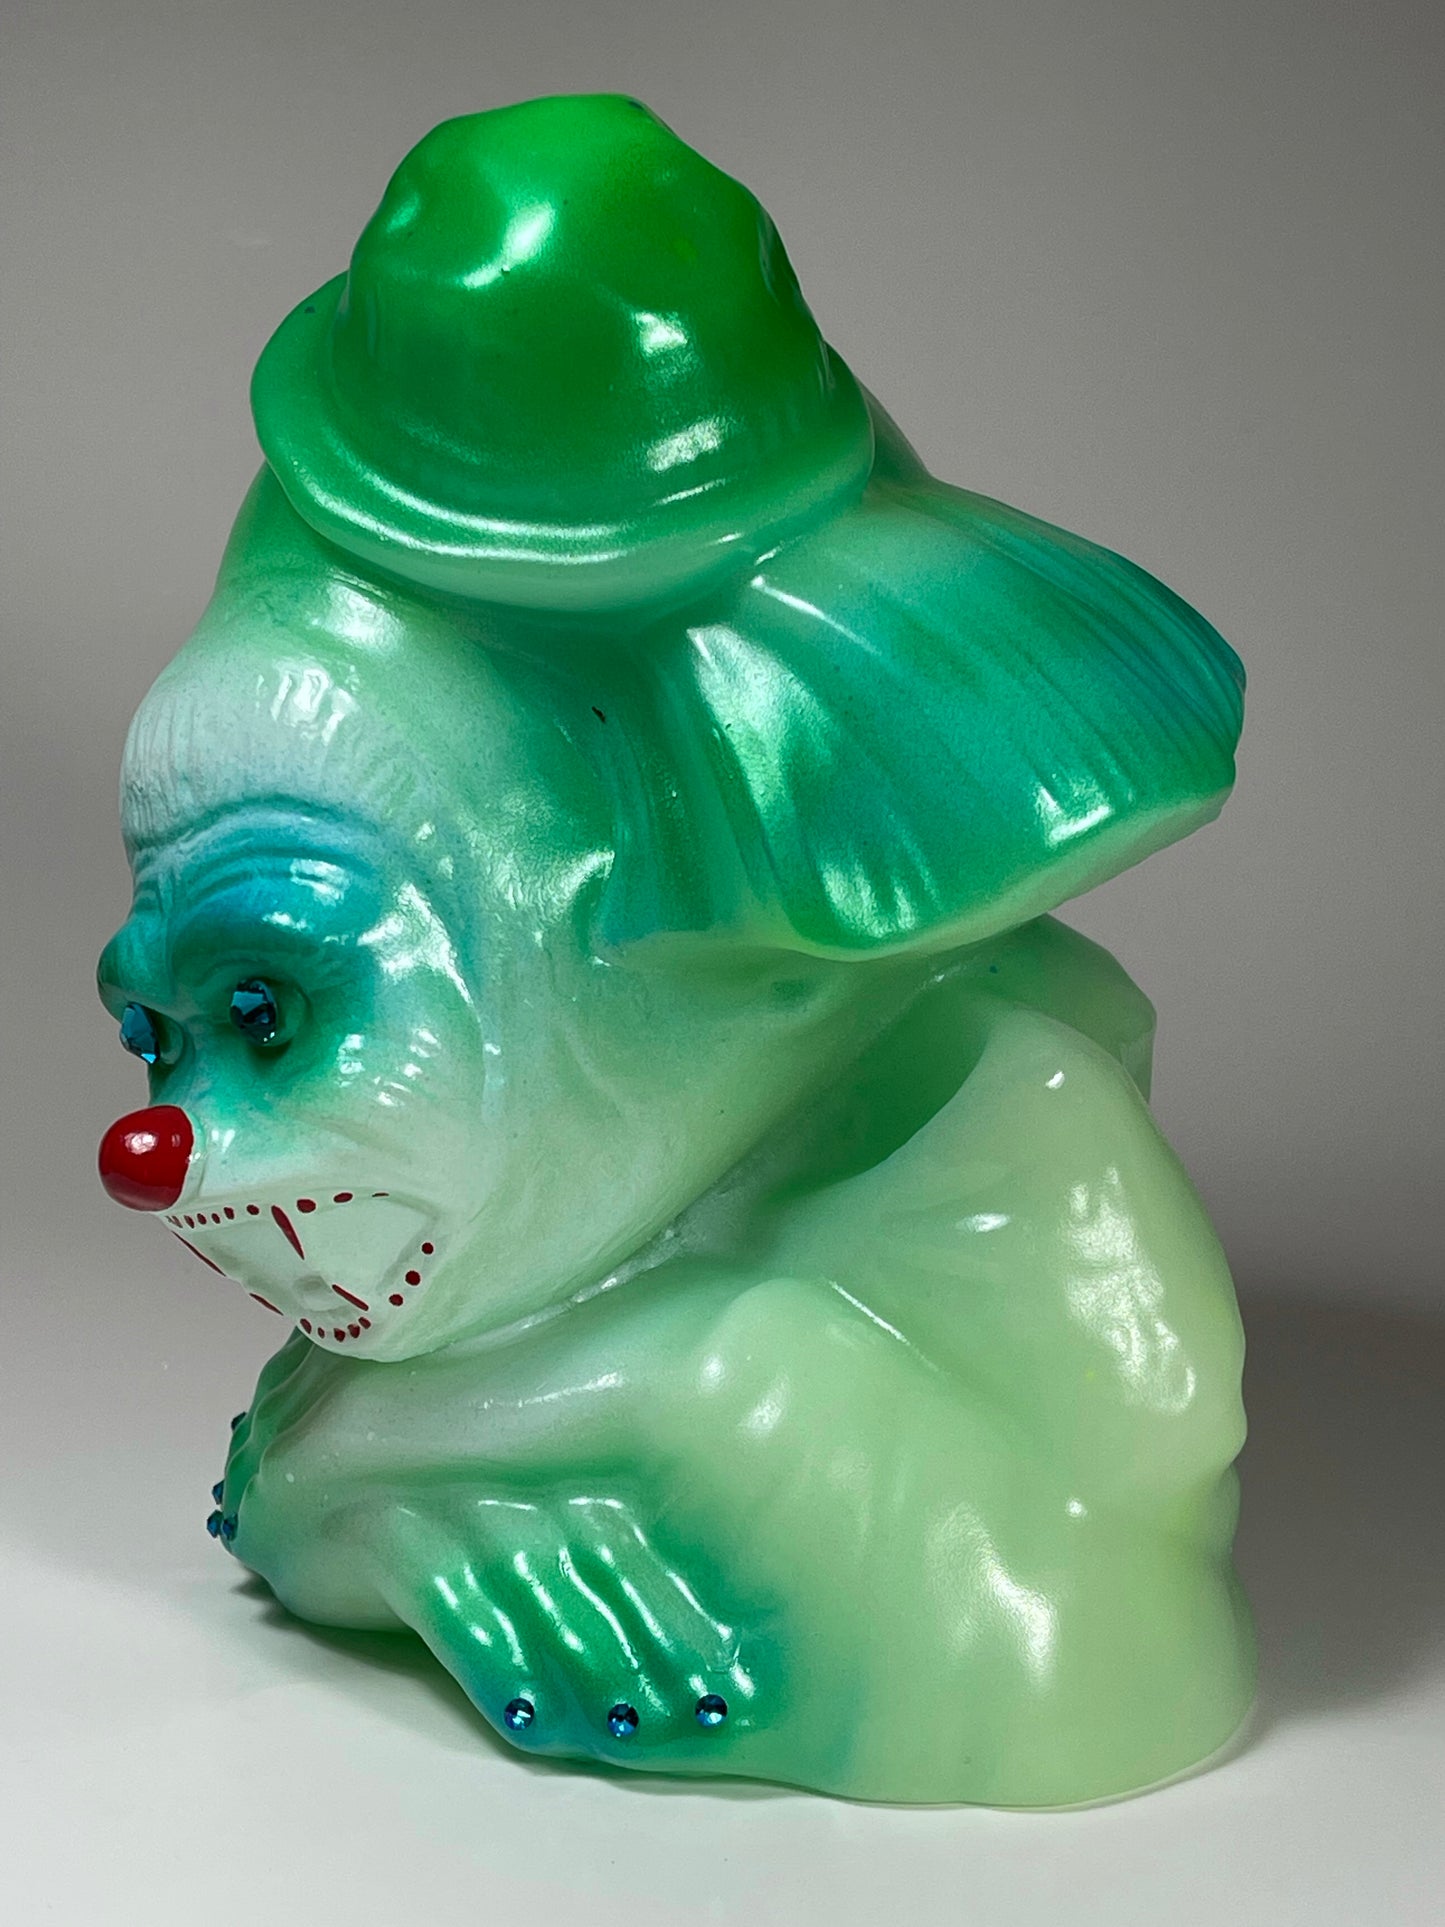 Ape Clown, Ready for His Closeup: Green and Blue Glow Entertaining Fun